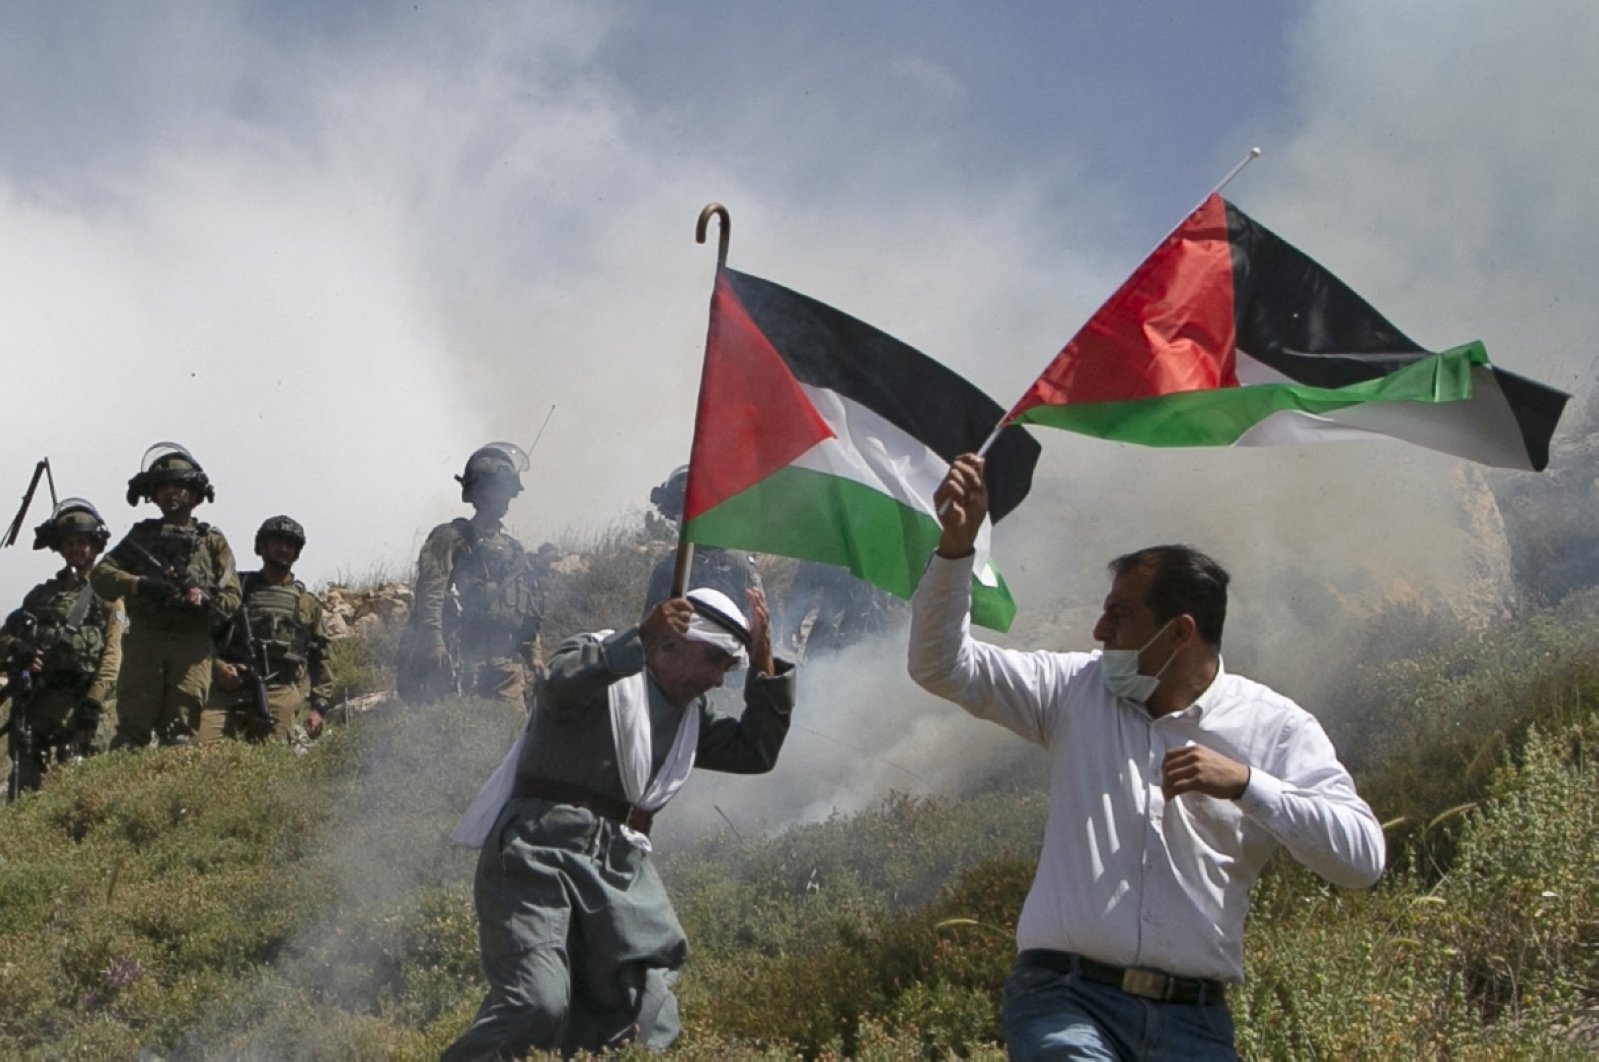 Palestine philistine What We